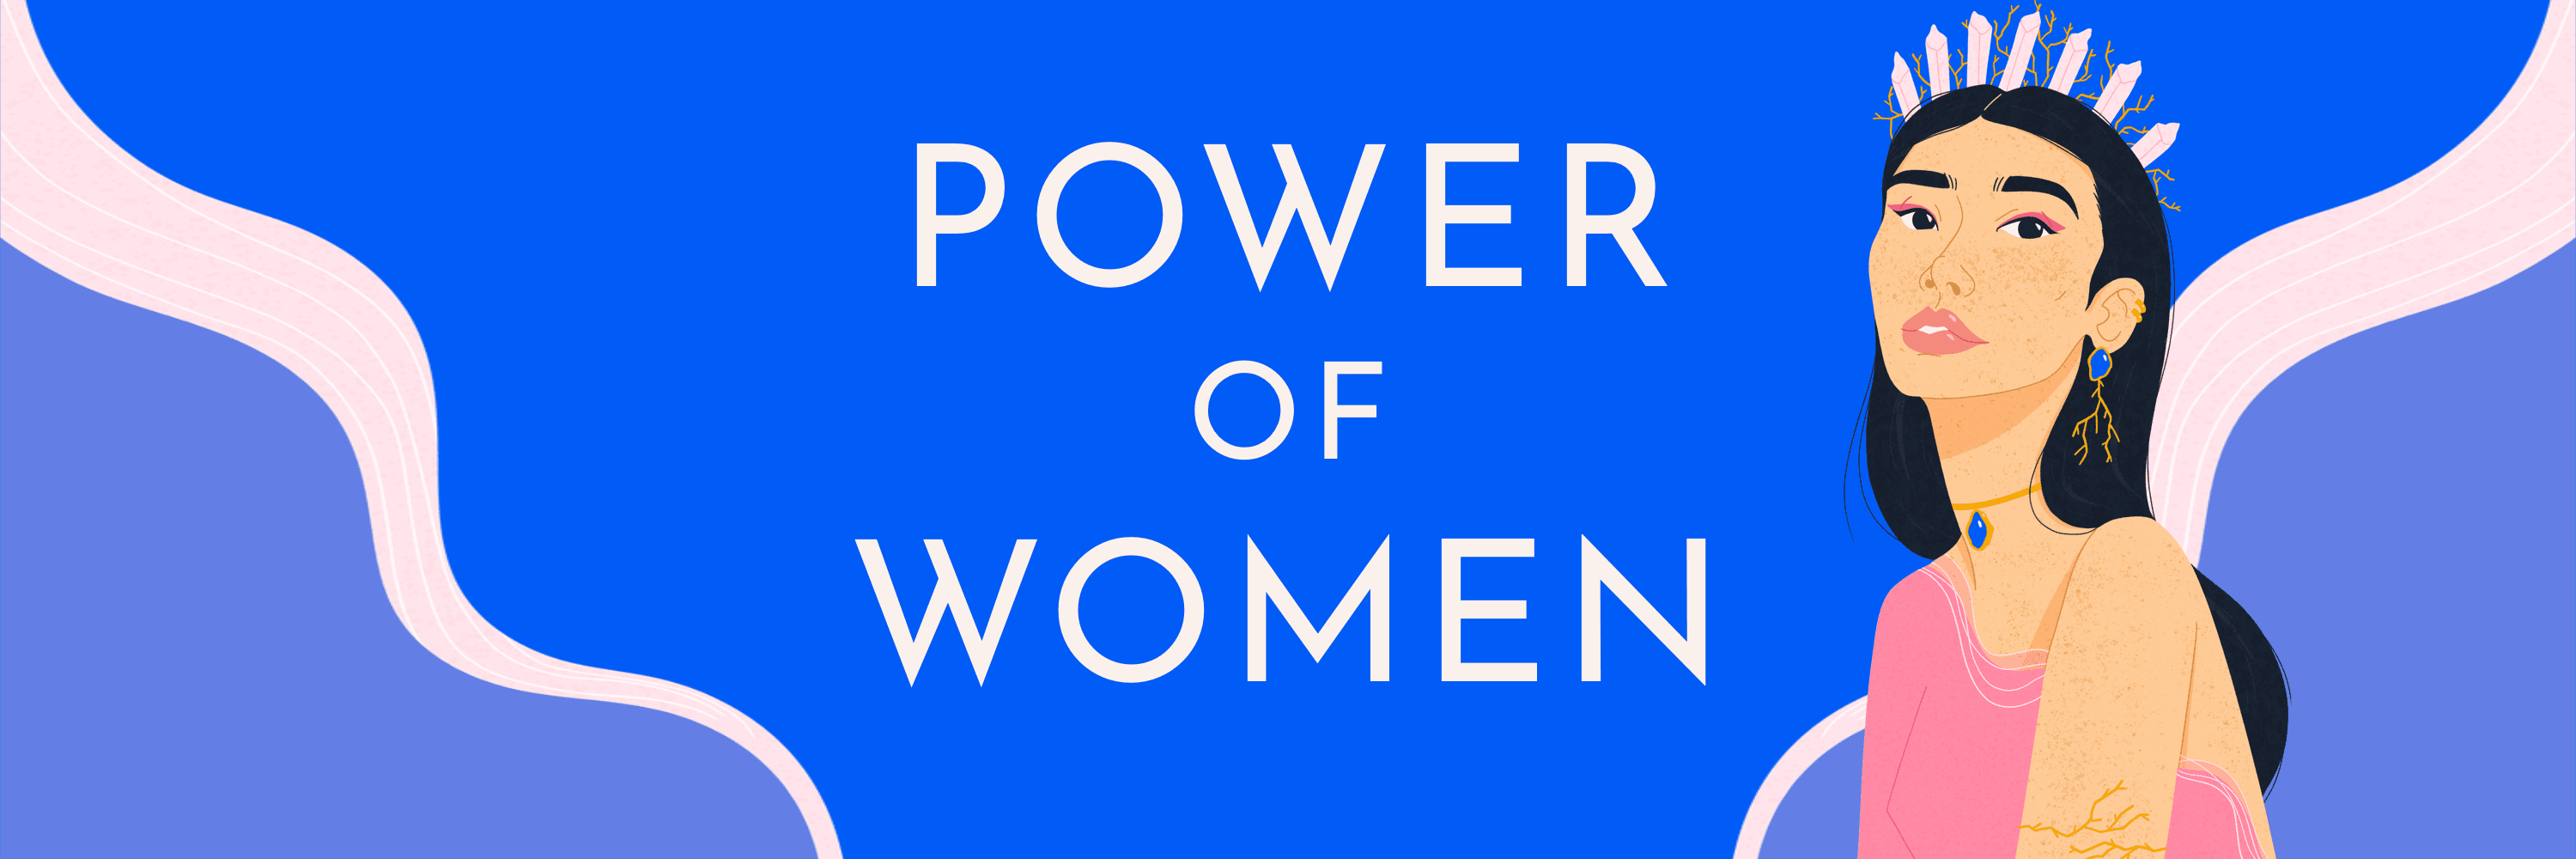 PowerOfWomenNFT2 bannière